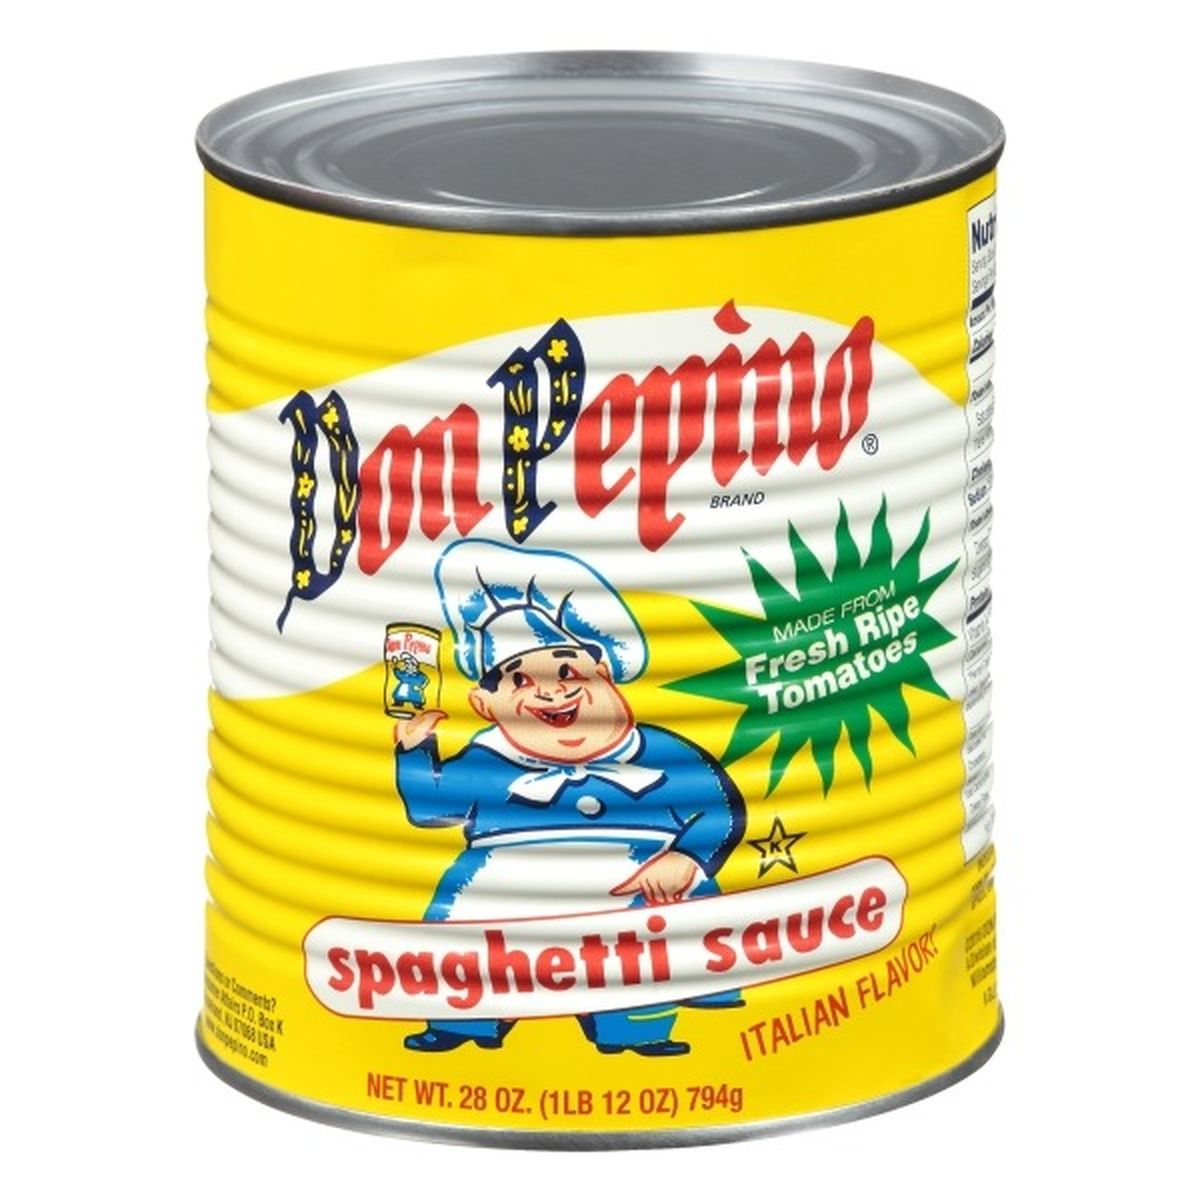 Calories in Don Pepino Spaghetti Sauce, Italian Flavor